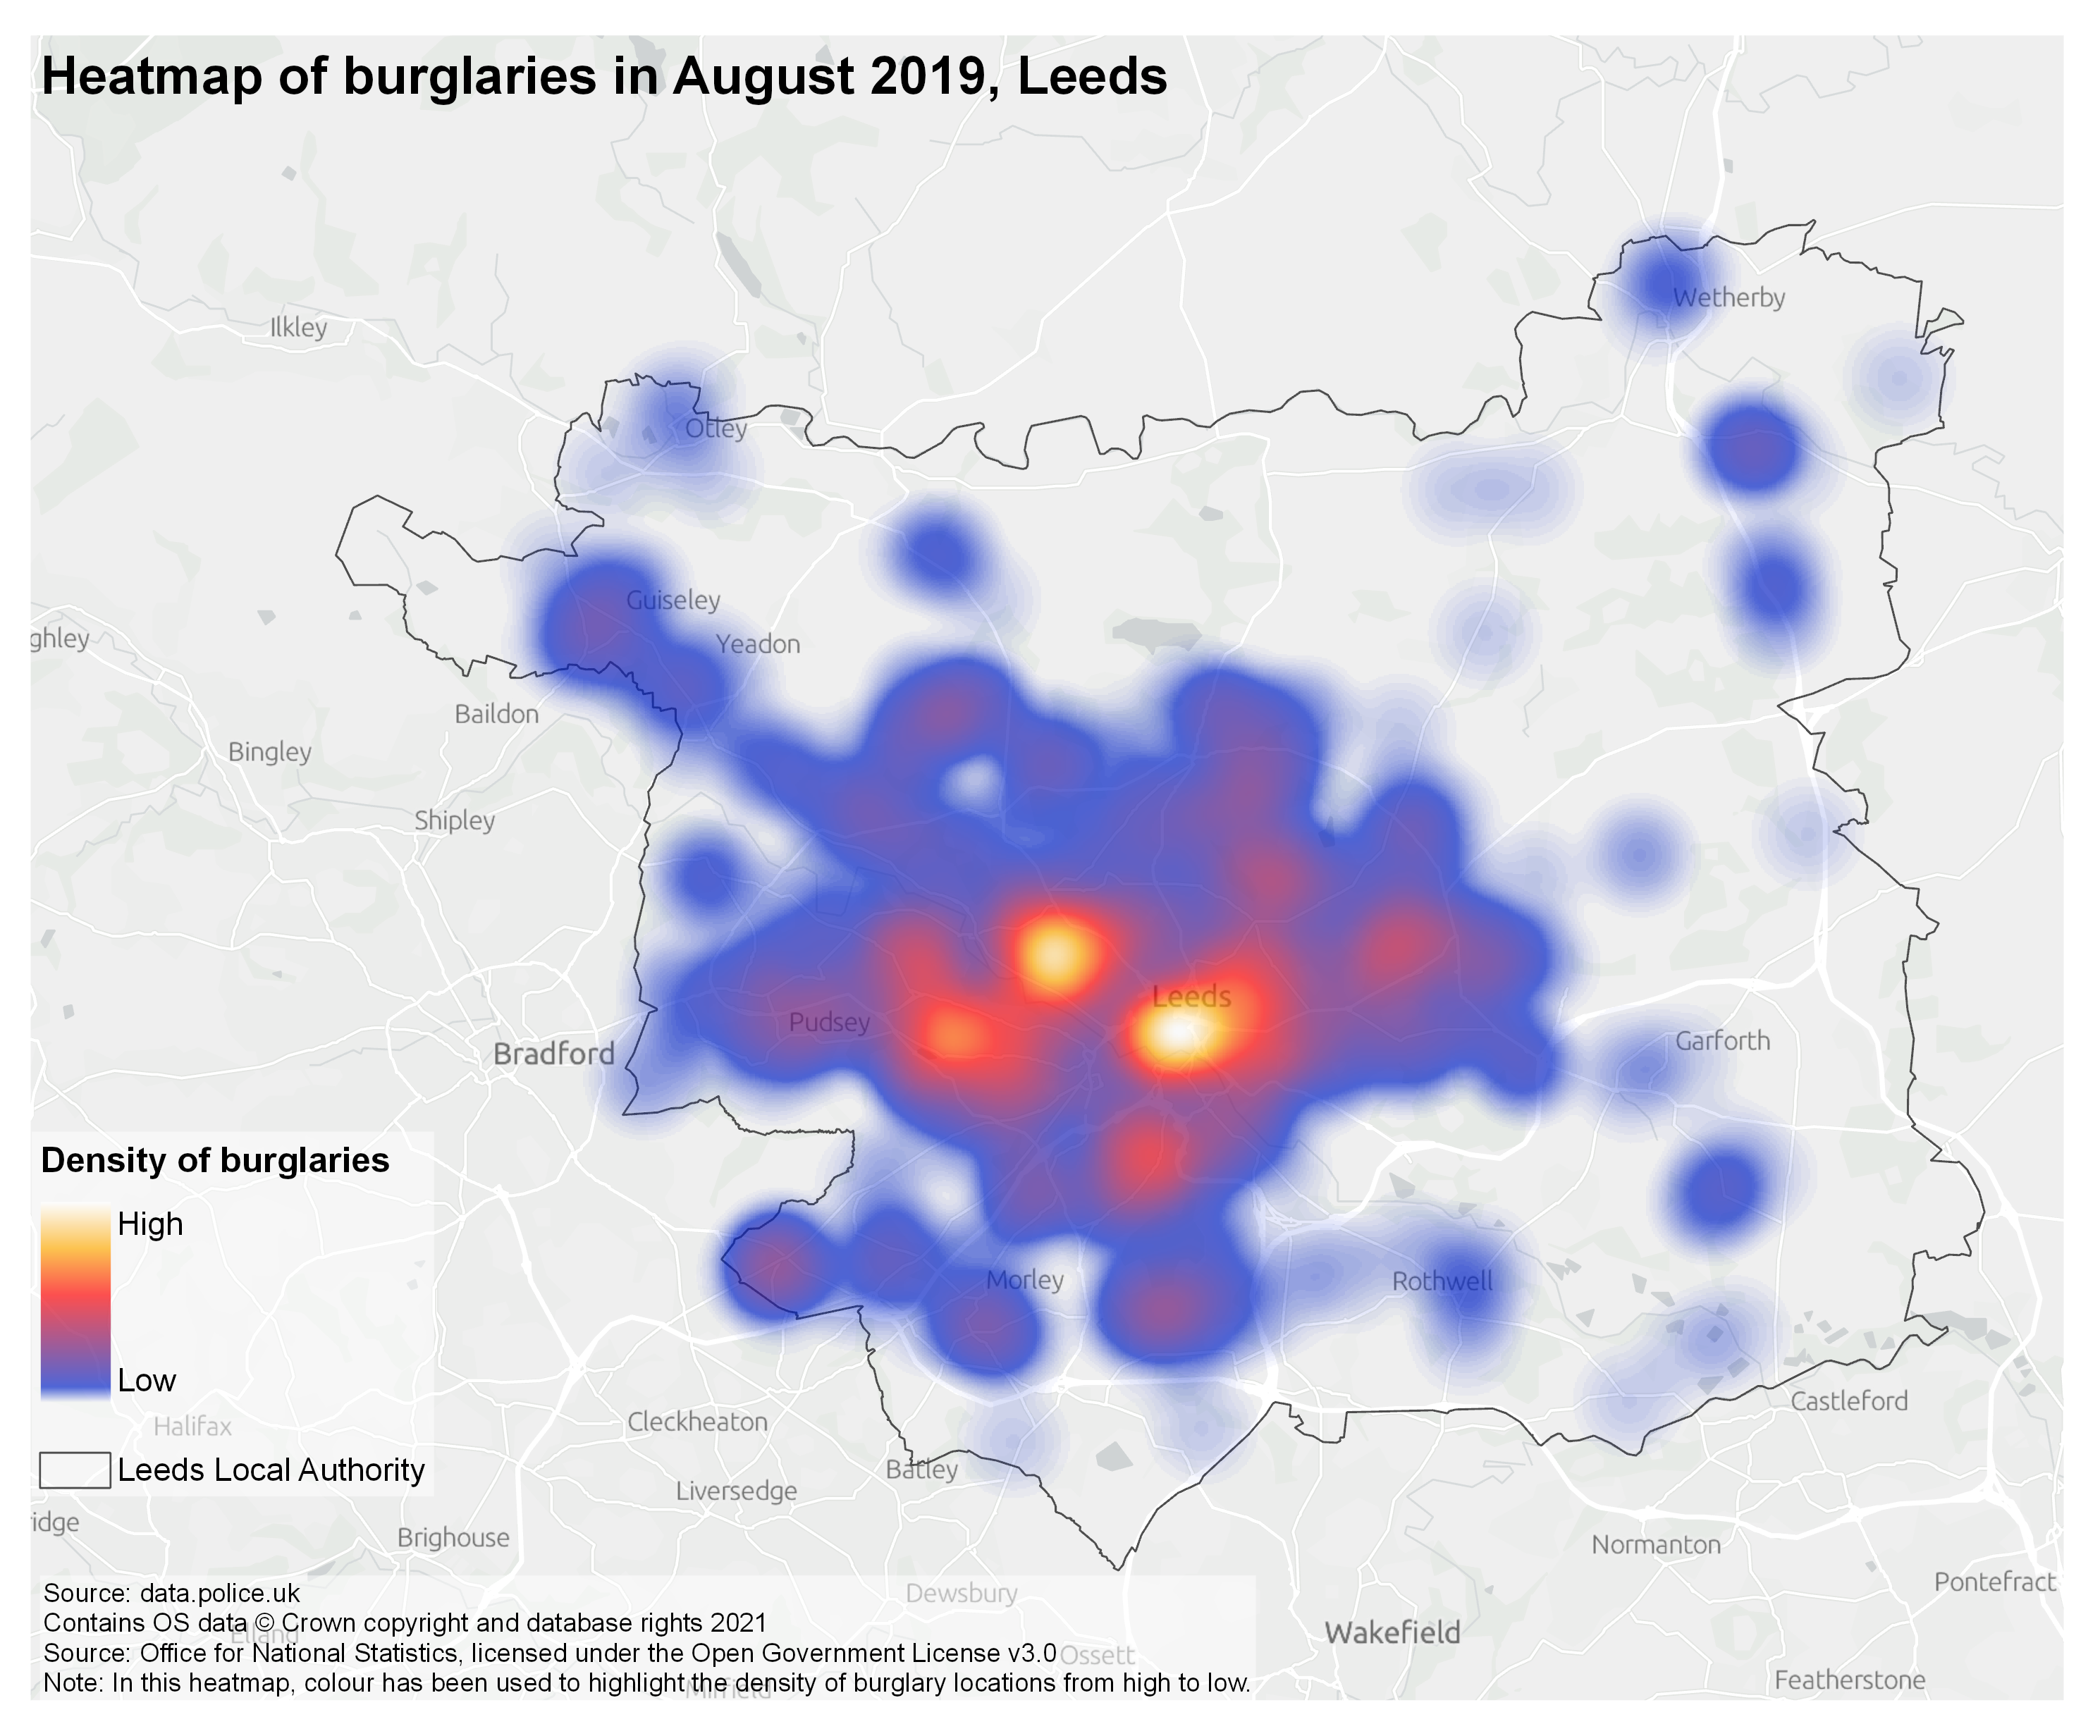 Heatmap of burglary incidents in London